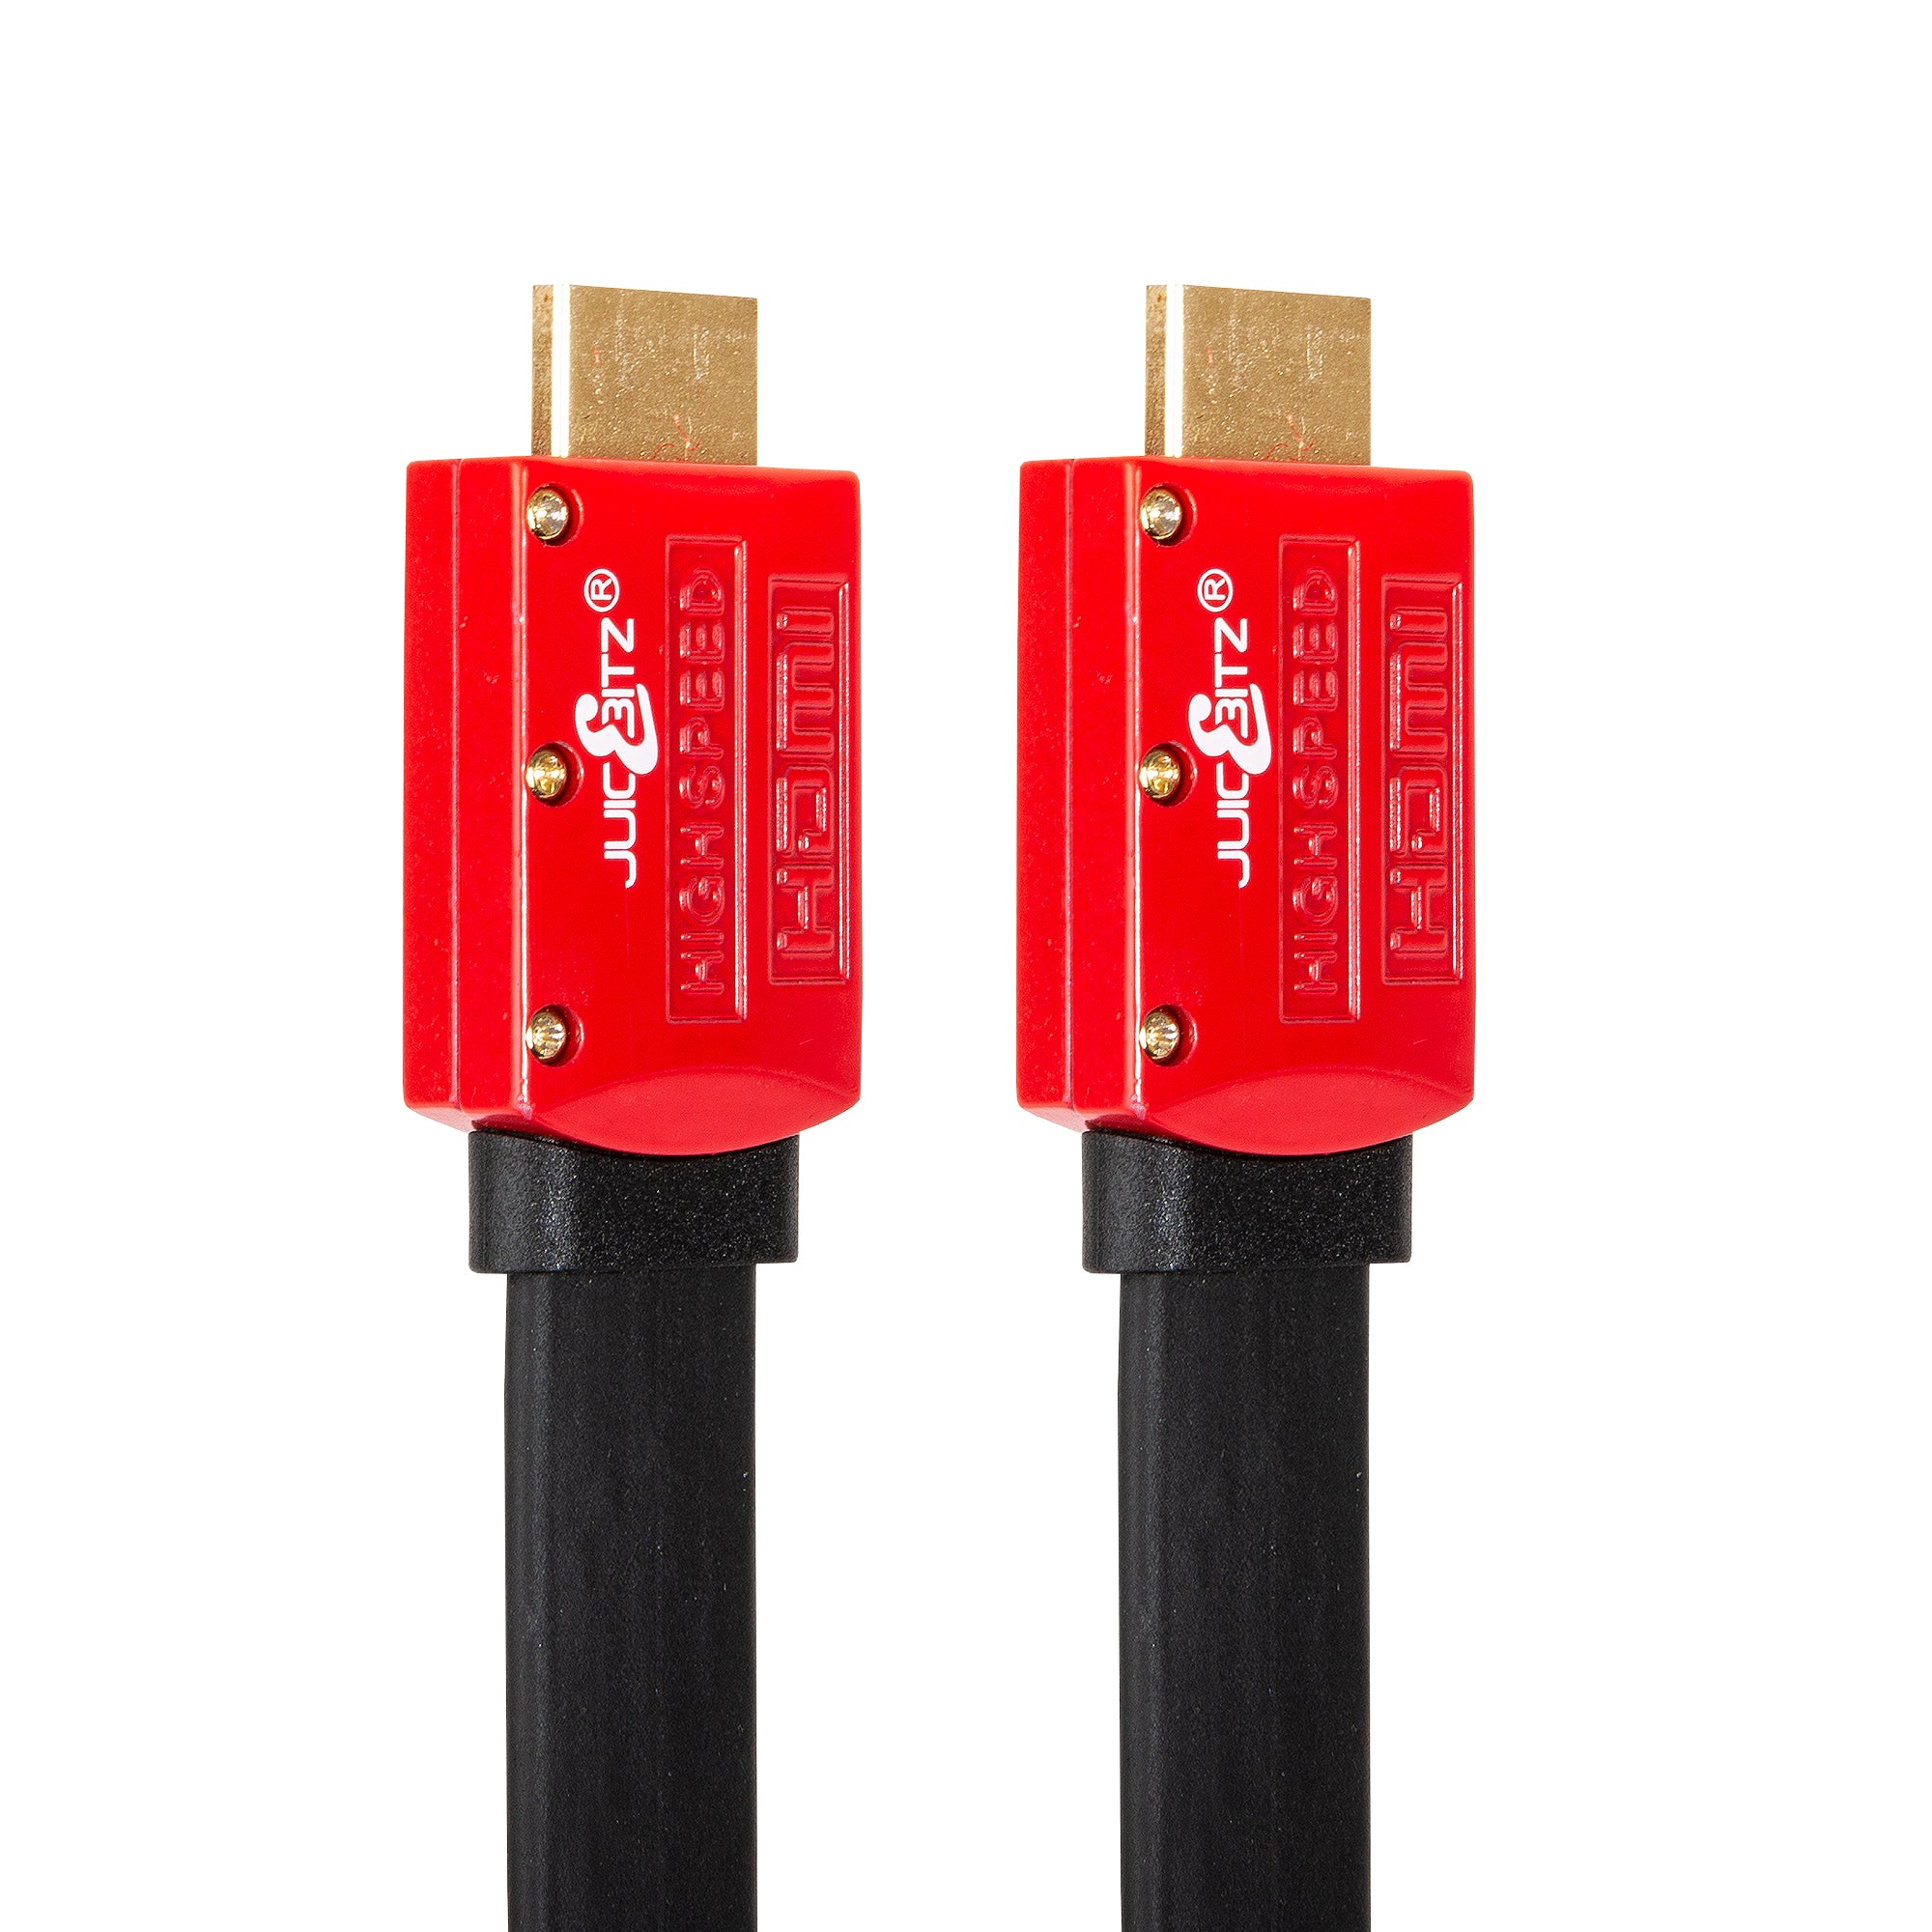 Mini HDMI to HDMI Adapter - 4K High Speed HDMI Adapter - 4K 30Hz Ultra HD  High Speed HDMI Adapter - HDMI 1.4 - Gold Plated Connectors - UHD Mini HDMI